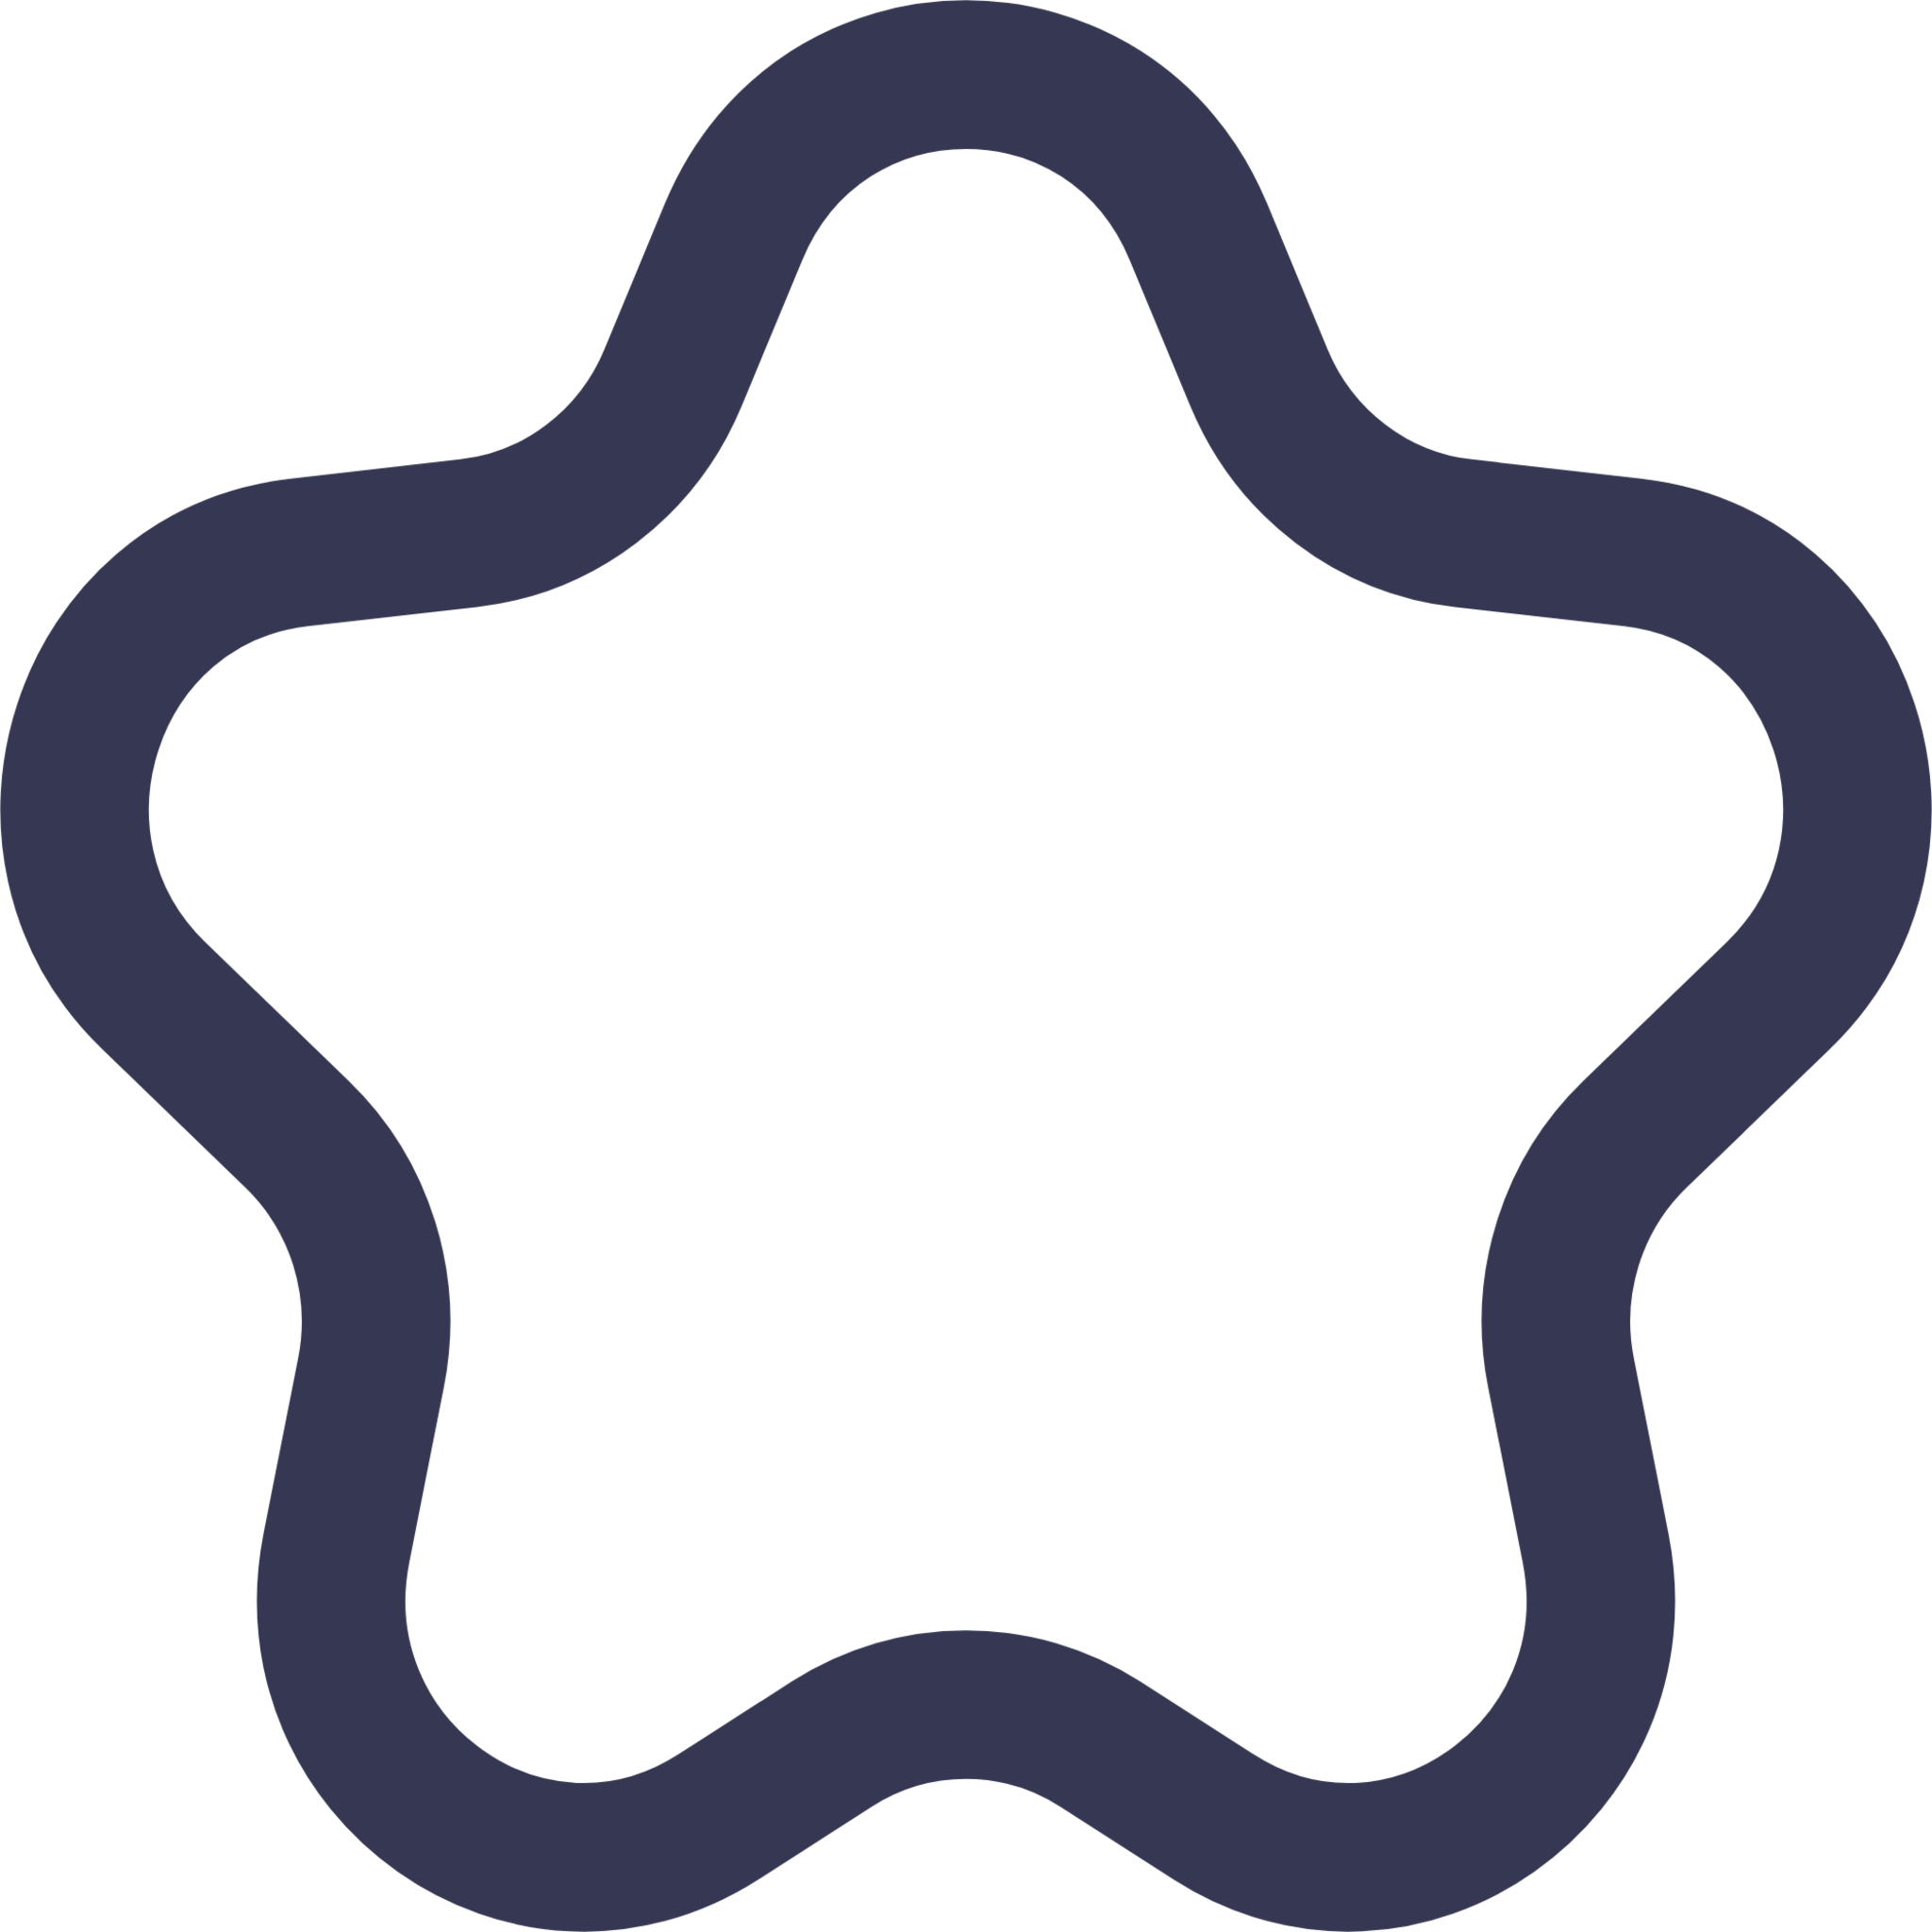 Star 1 icon